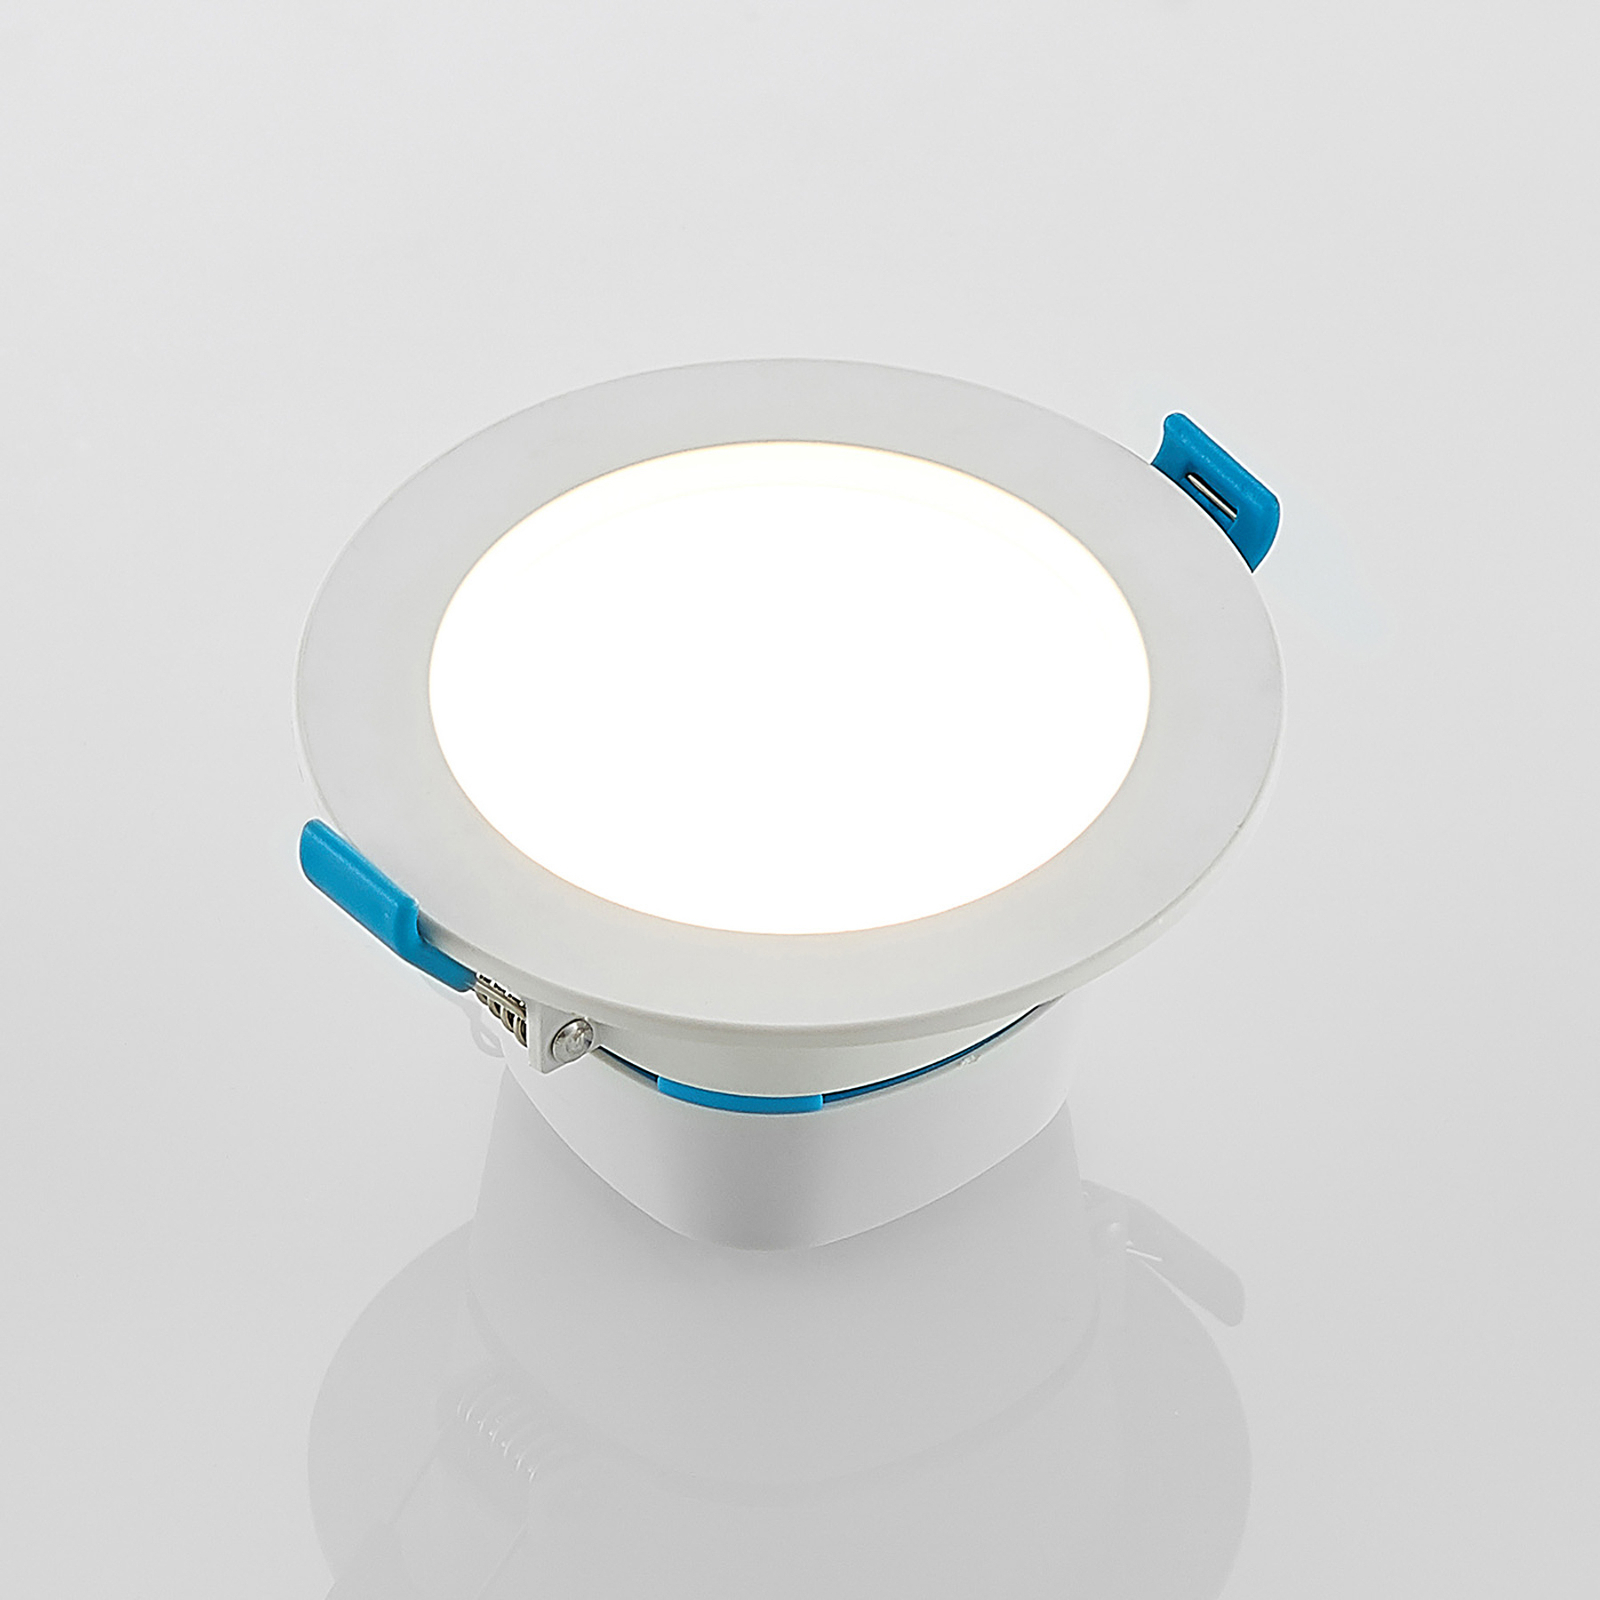 Arcchio LED inbouwlamp Milaine, wit, dimbaar, SETE